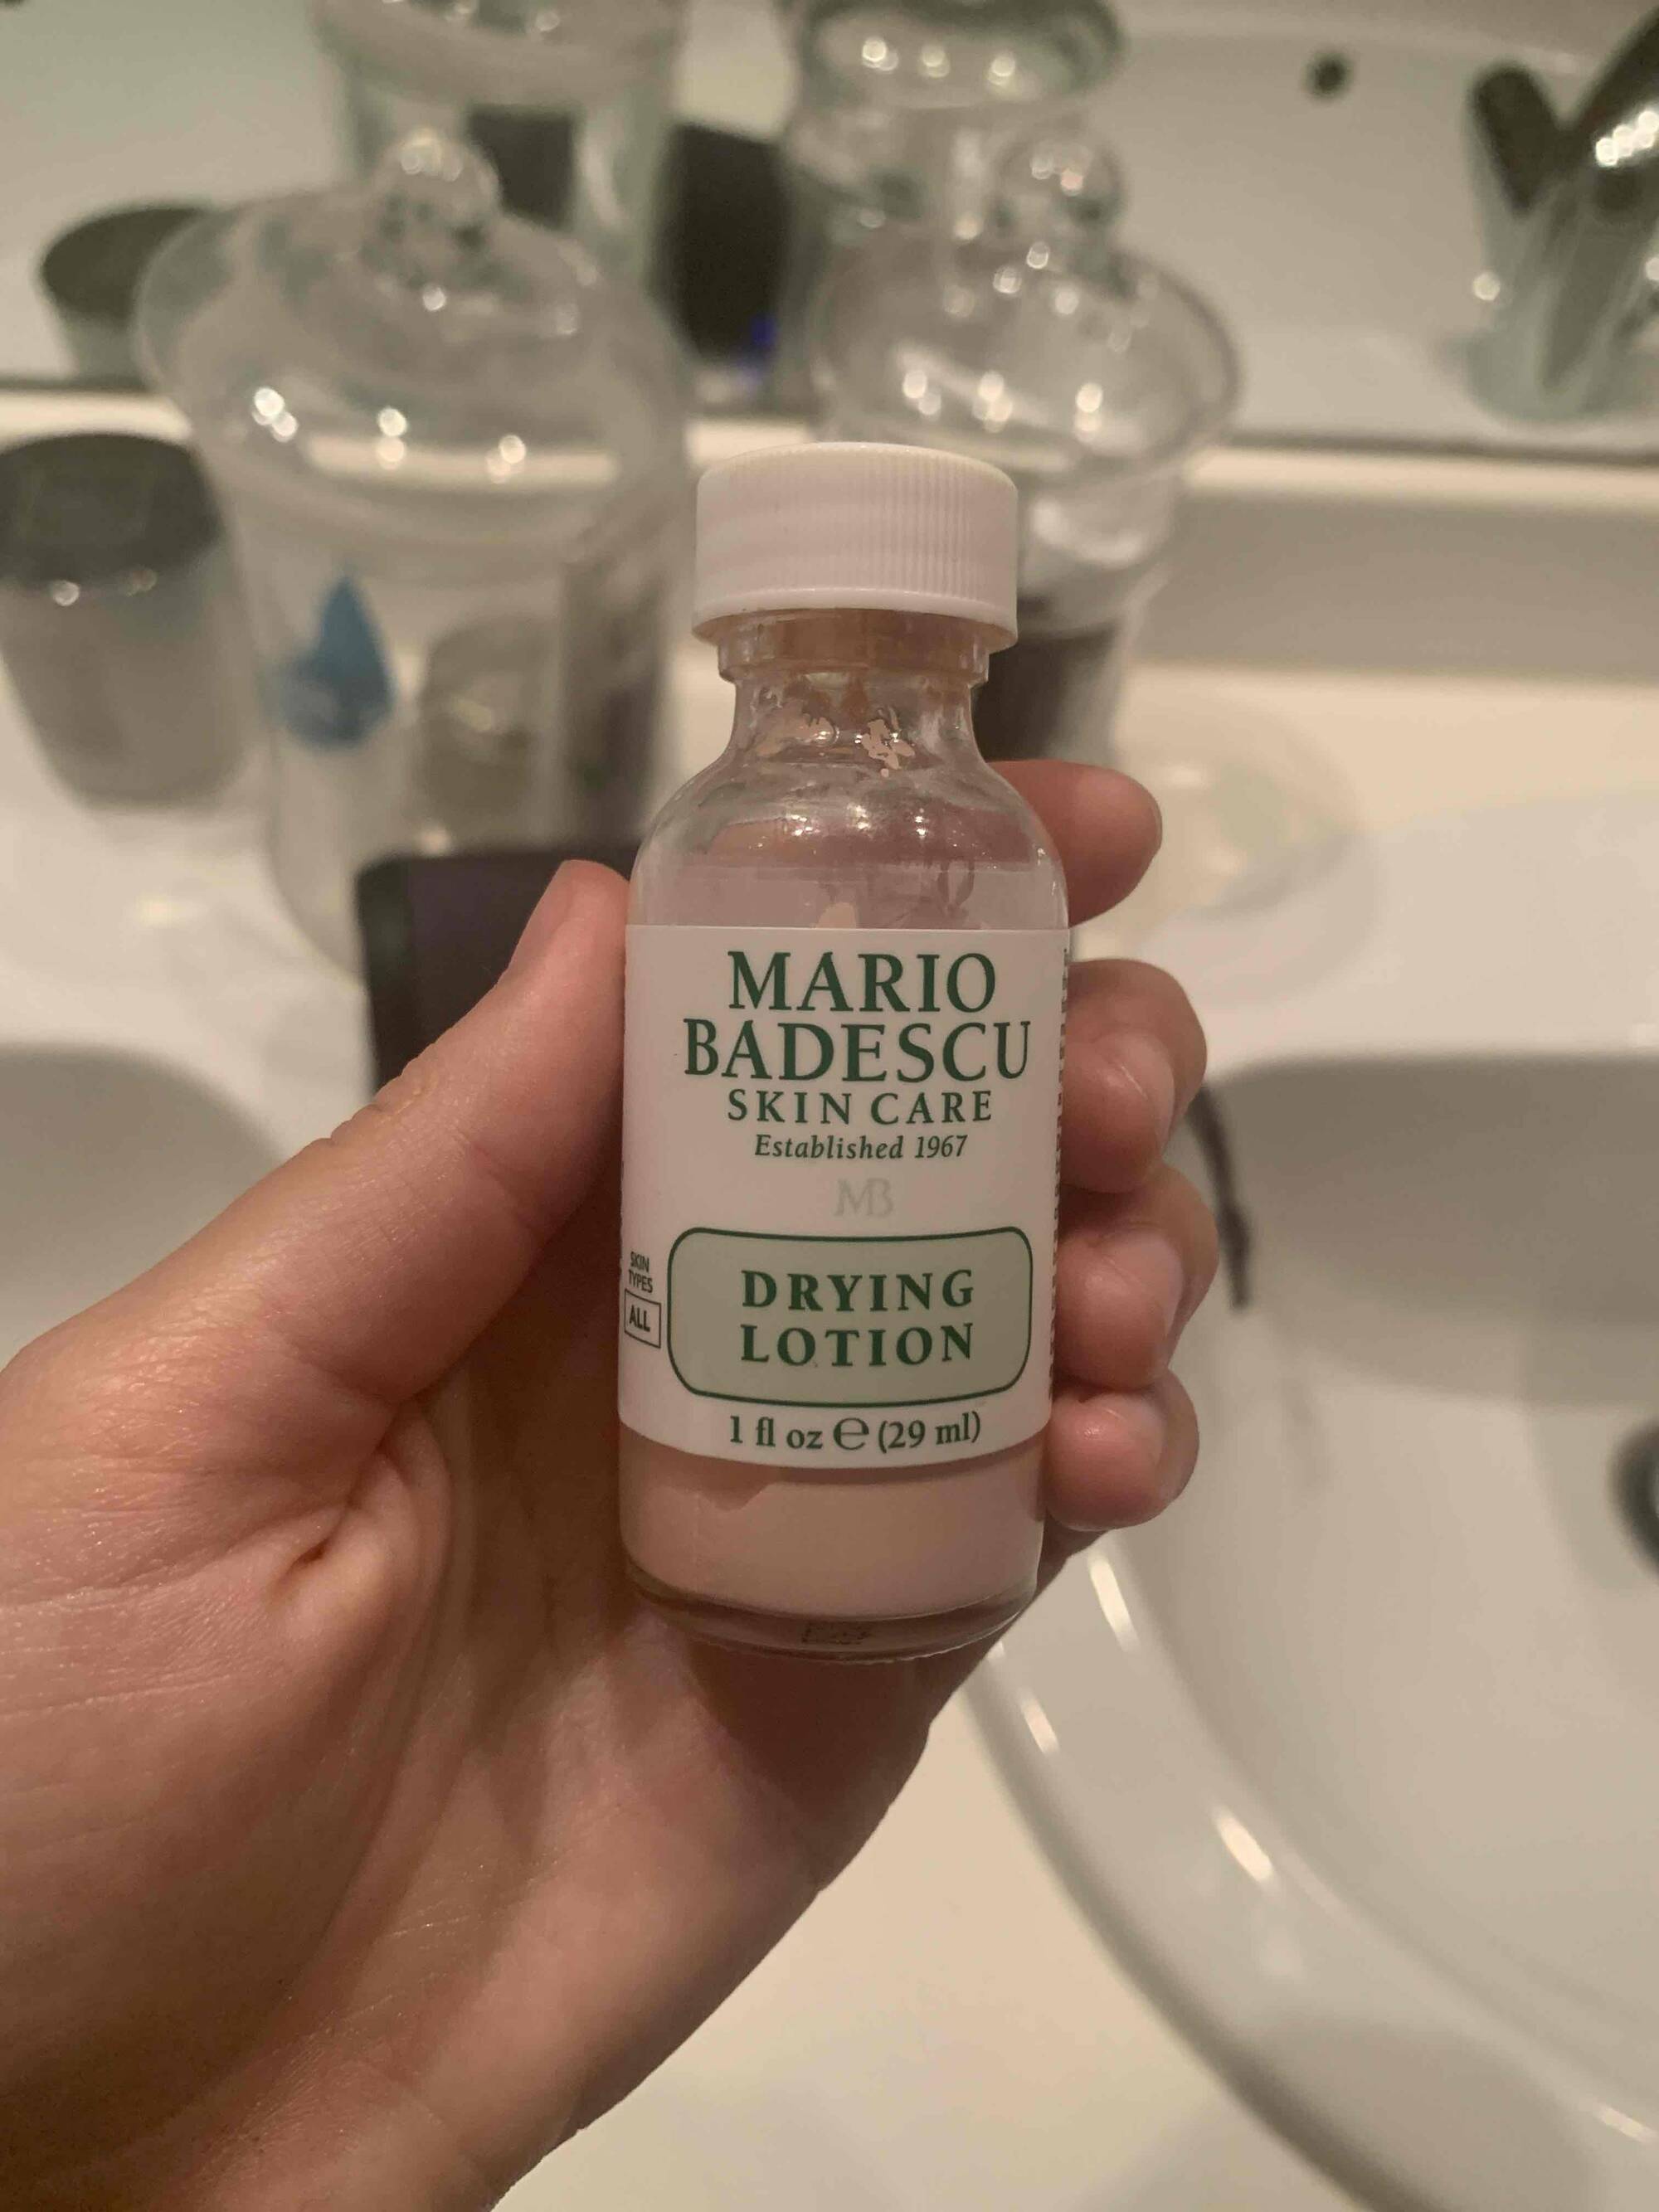 MARIO BADESCU - Drying lotion